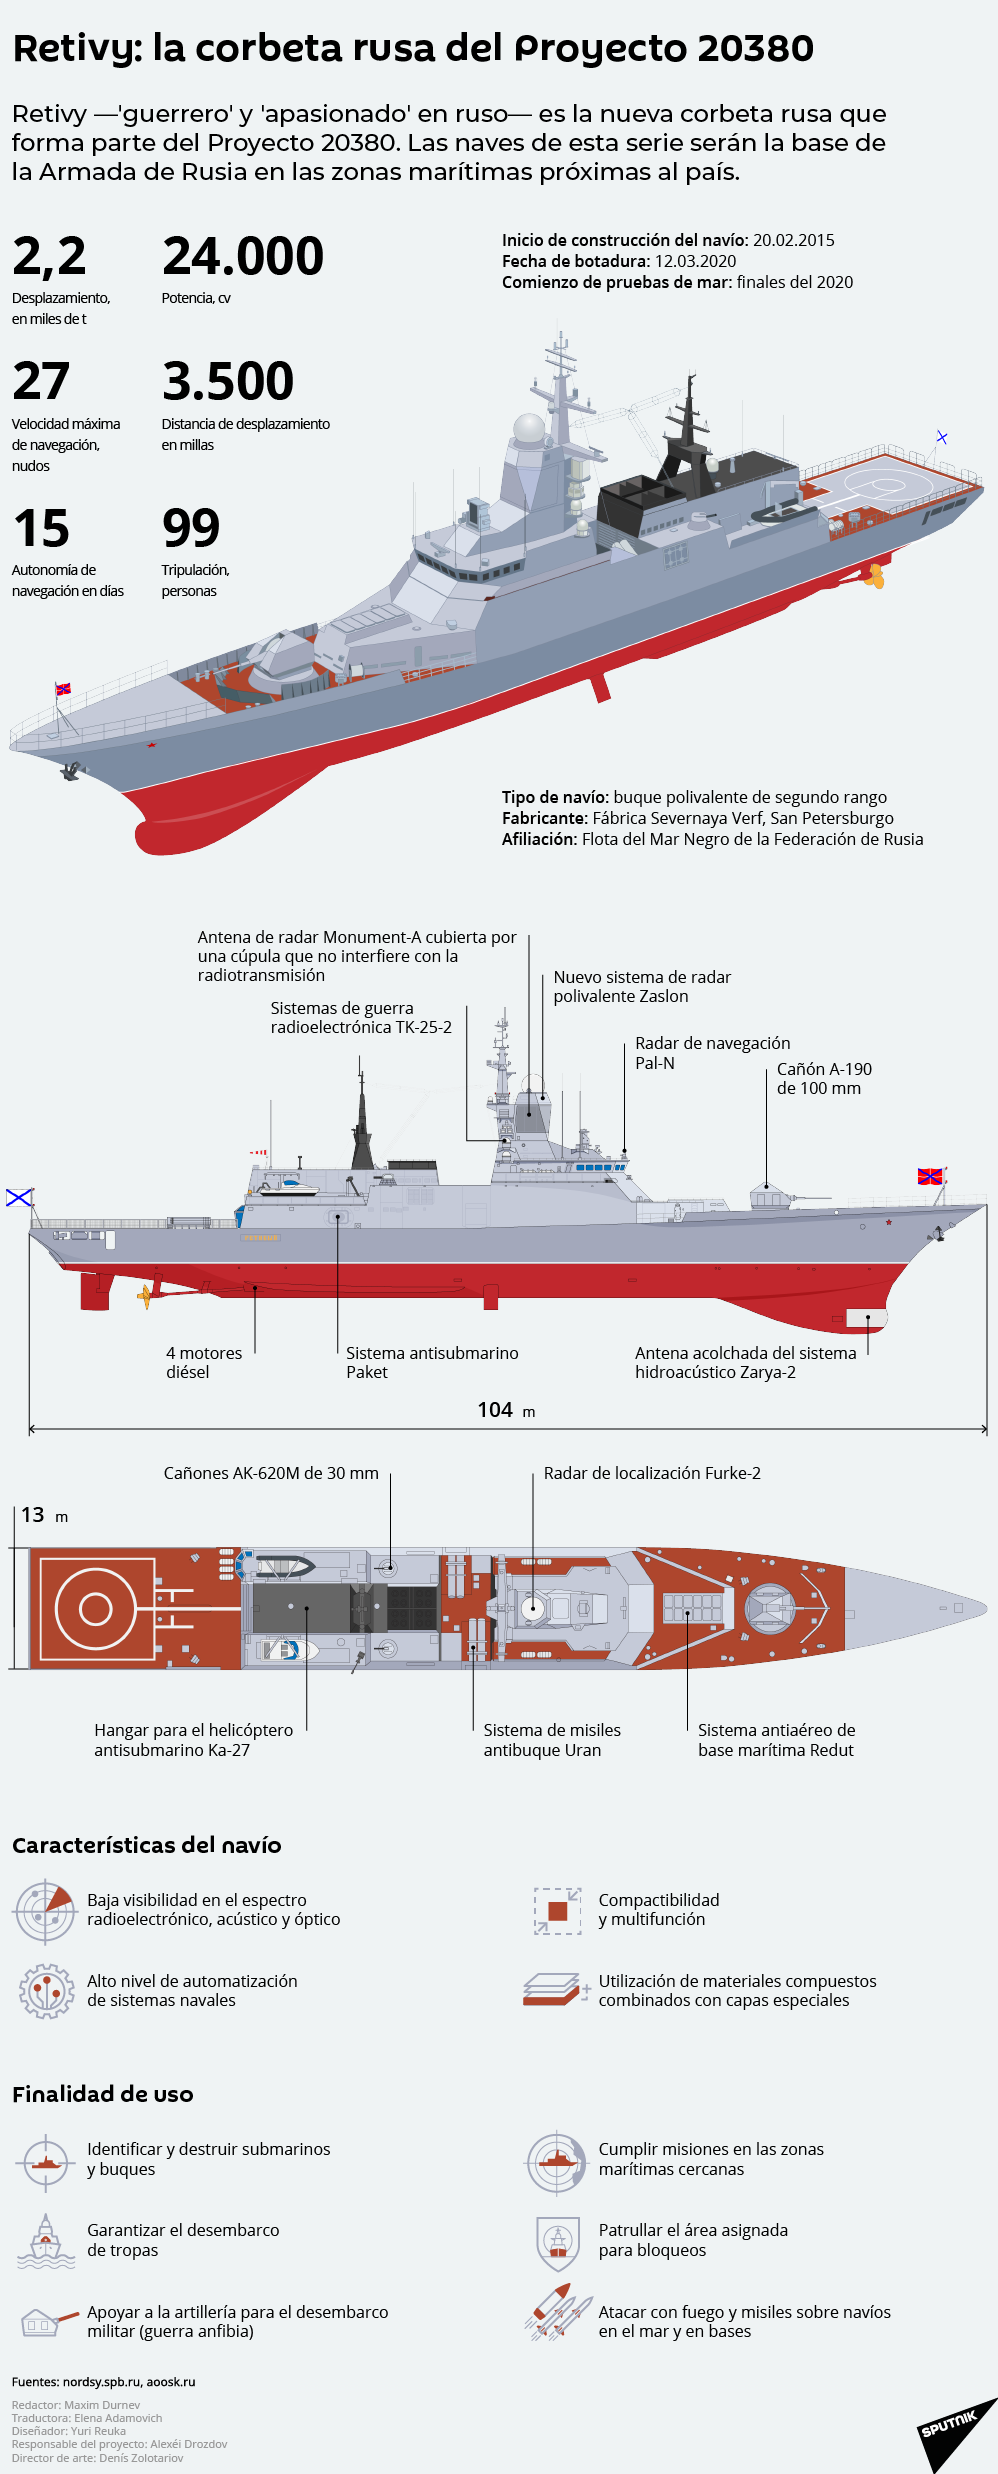 Retivy, el ‘guerrero’ de la Armada de Rusia - Sputnik Mundo